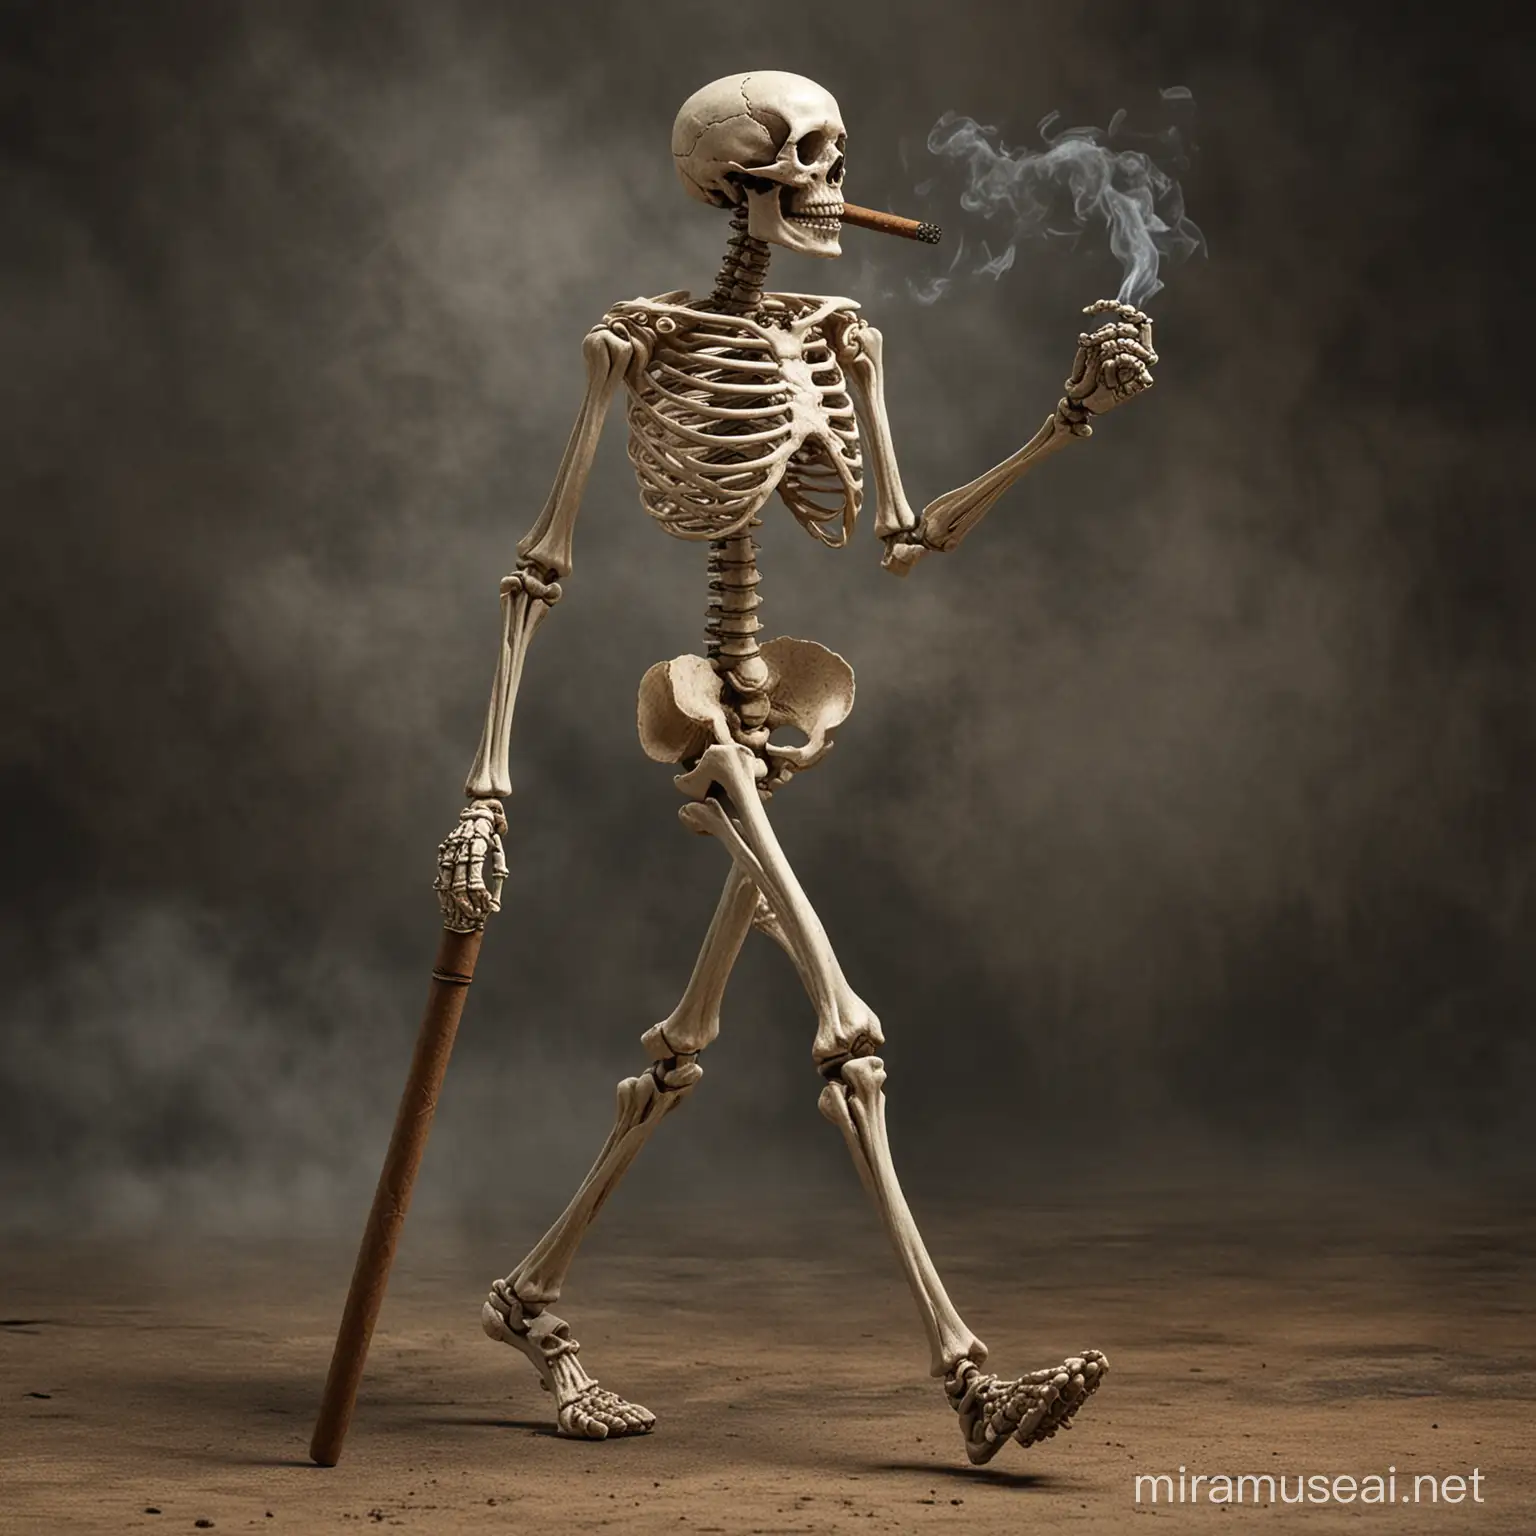 Skeletal Figure Strolling with a Cigar